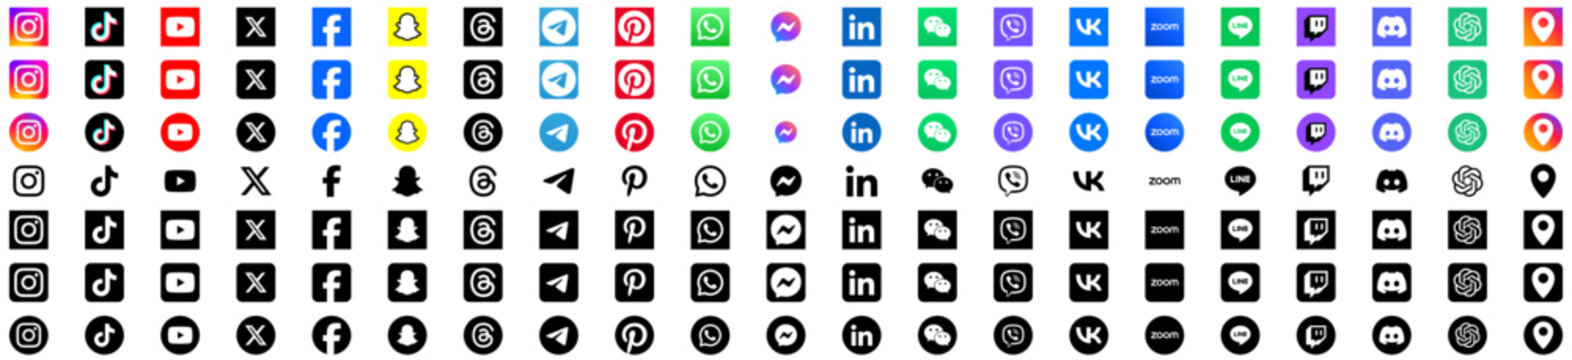 social media icon set or social network logos , facebook, instagram, x, youtube, whatsapp, telegram, snapchat, tiktok, flat vector icon .popular social media web icons logo collection set